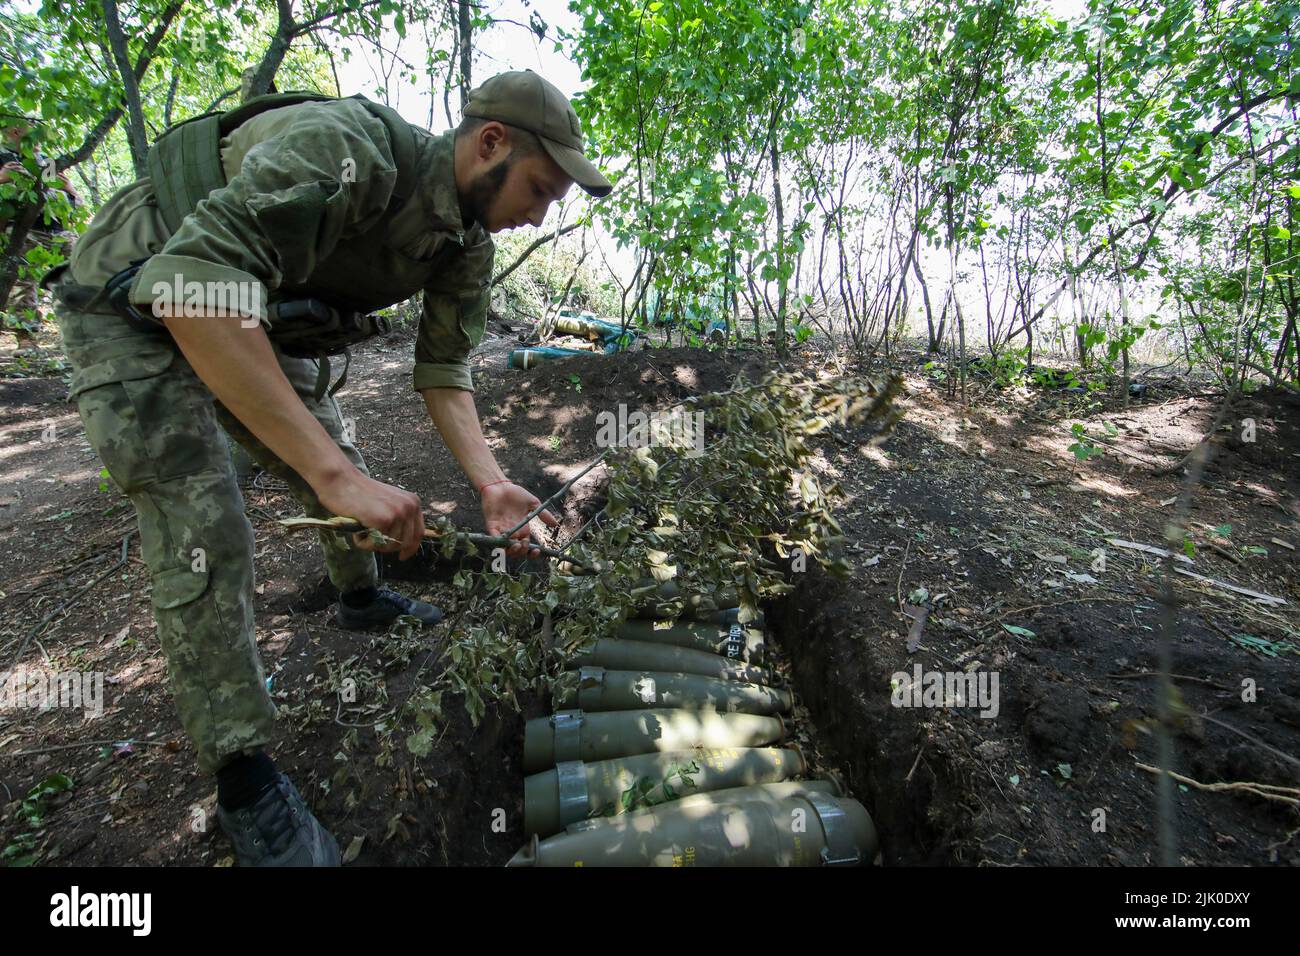 KHARKIV REGION, UKRAINE - JULY 28, 2022 - A Ukrainian serviceman covers ammunition with a camouflage net, Kharkiv Region, northeastern Ukraine. This p Stock Photo